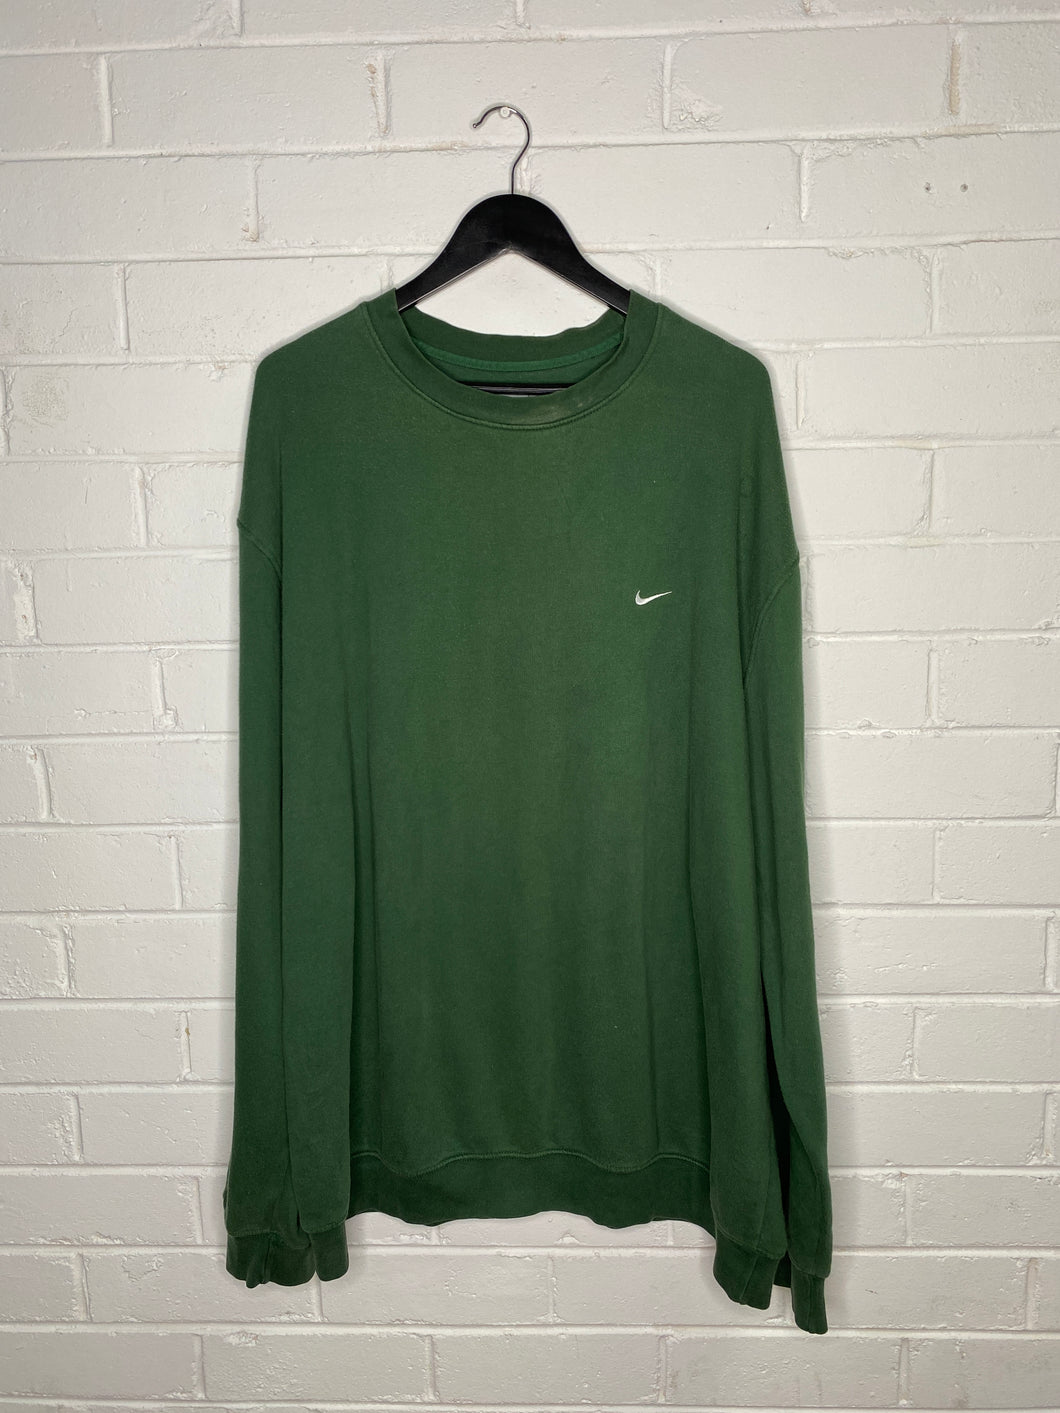 Vintage Nike Sweater